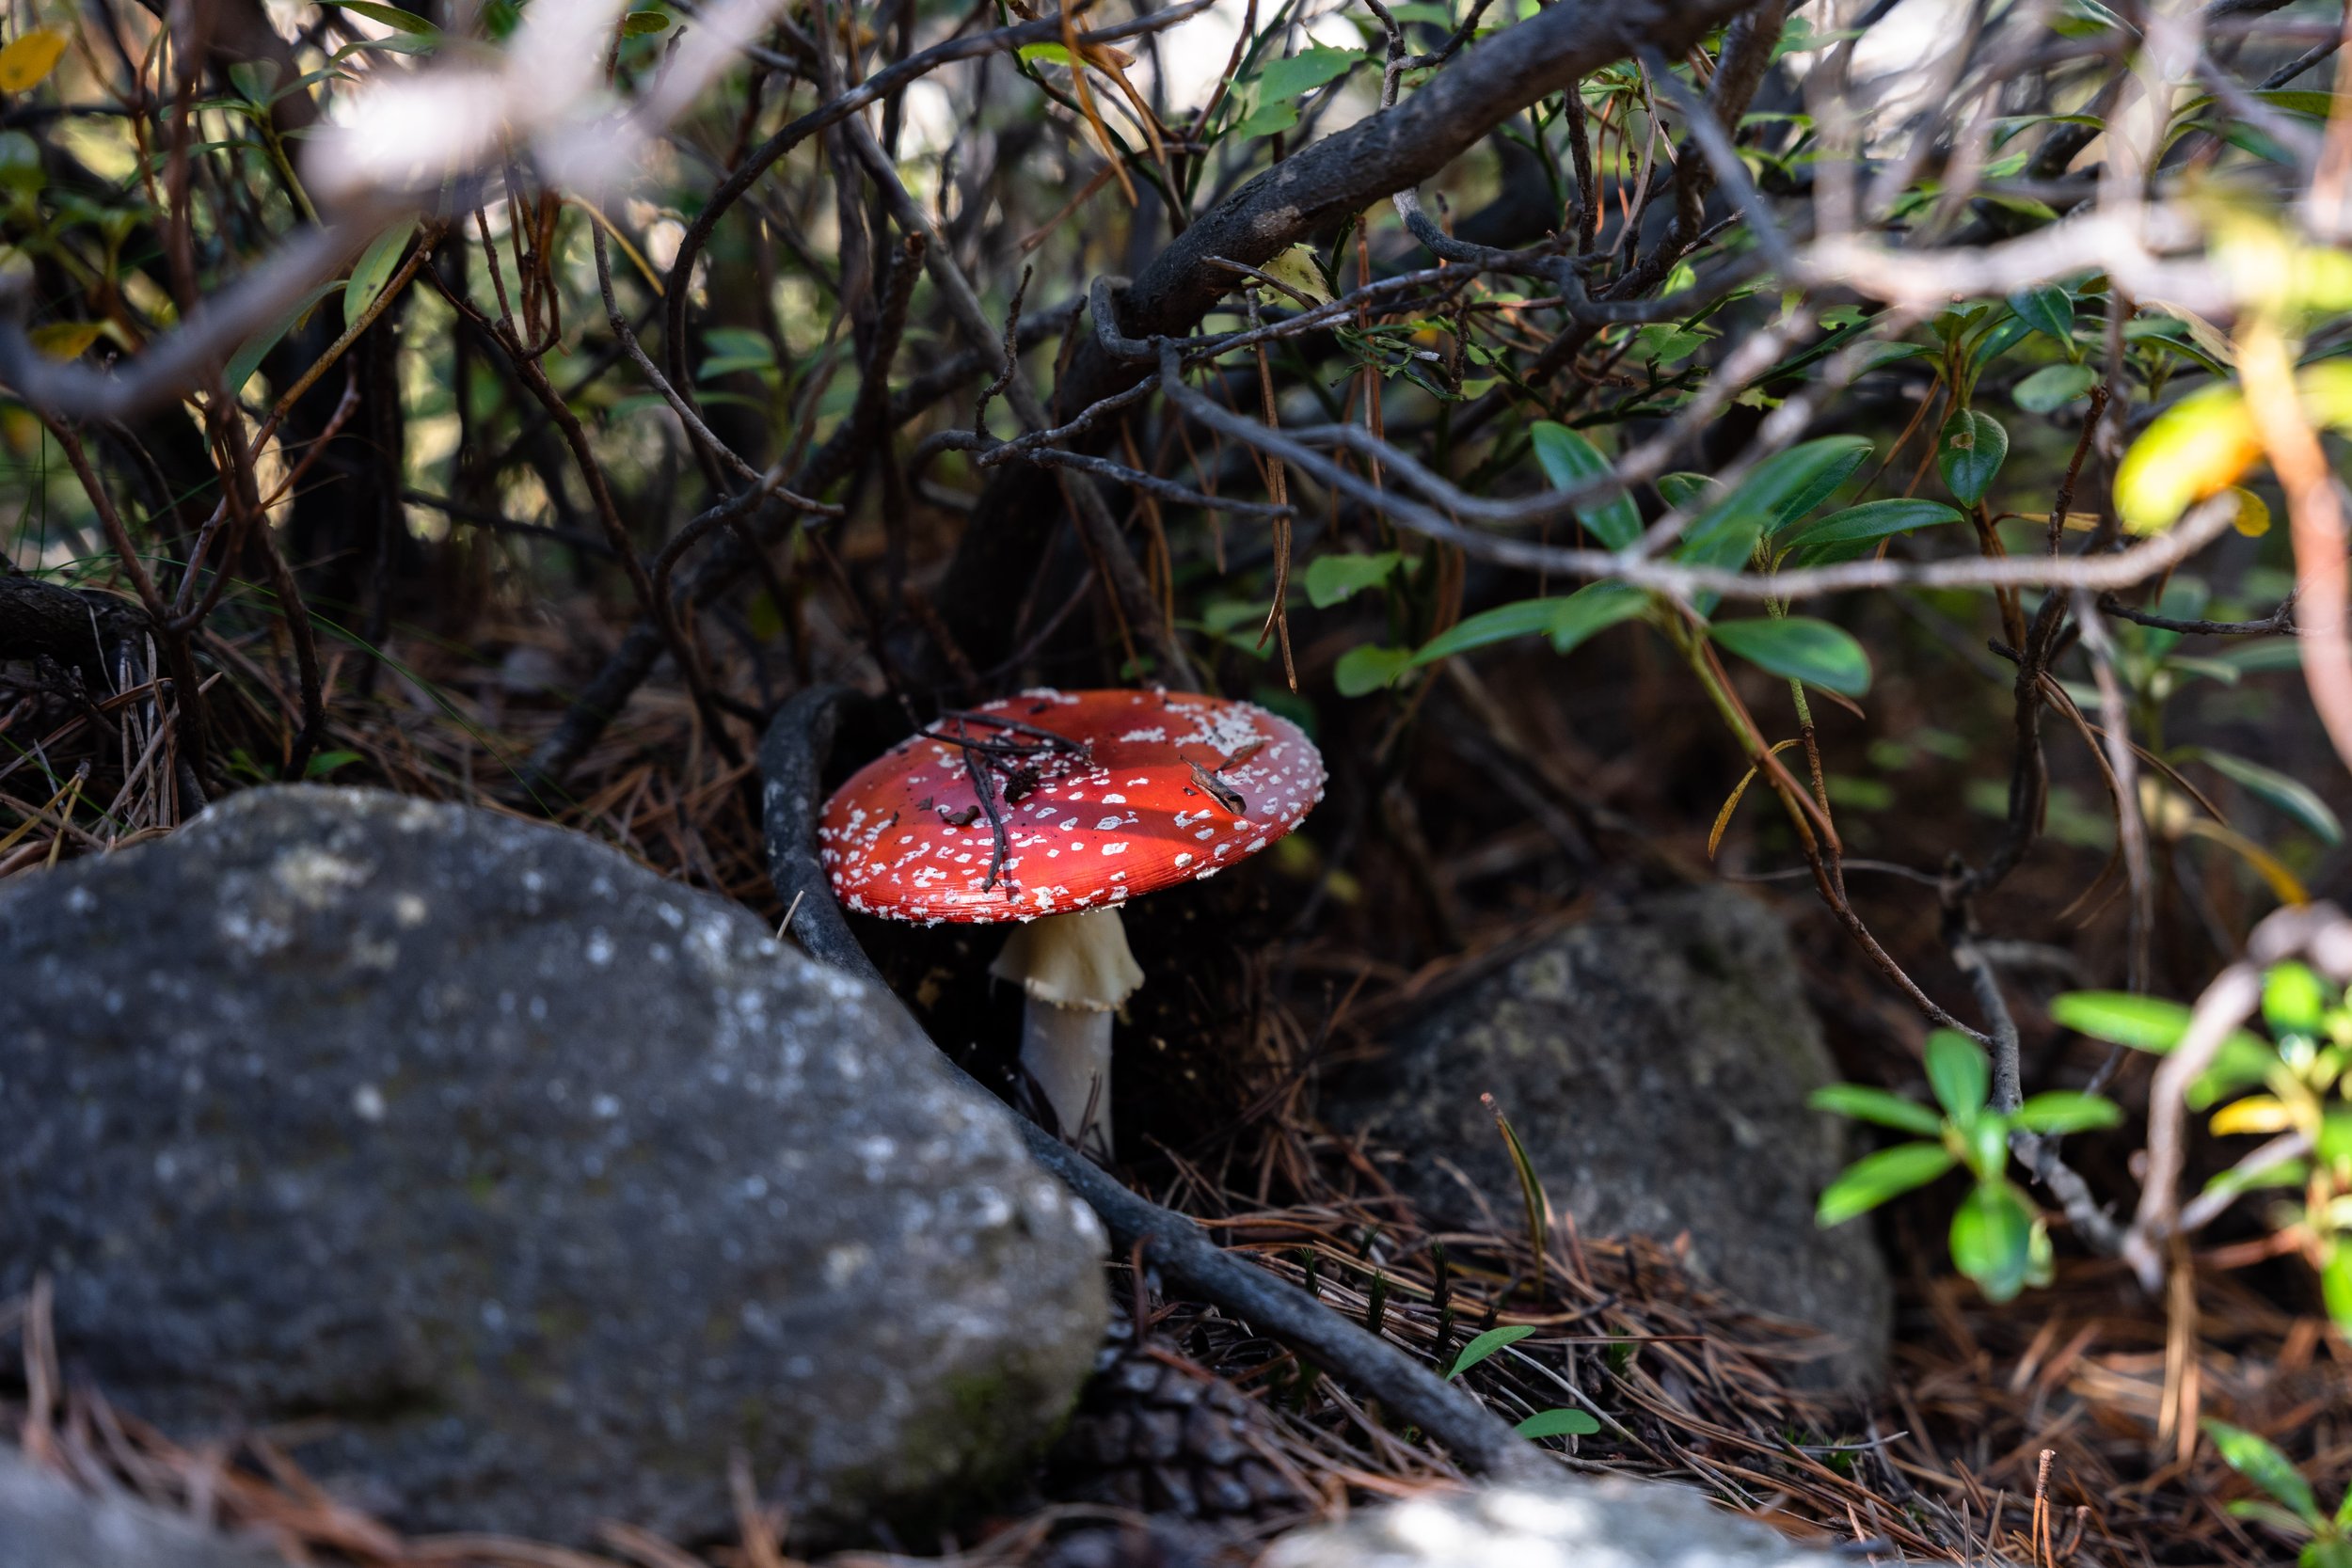  A potent looking mushroom 